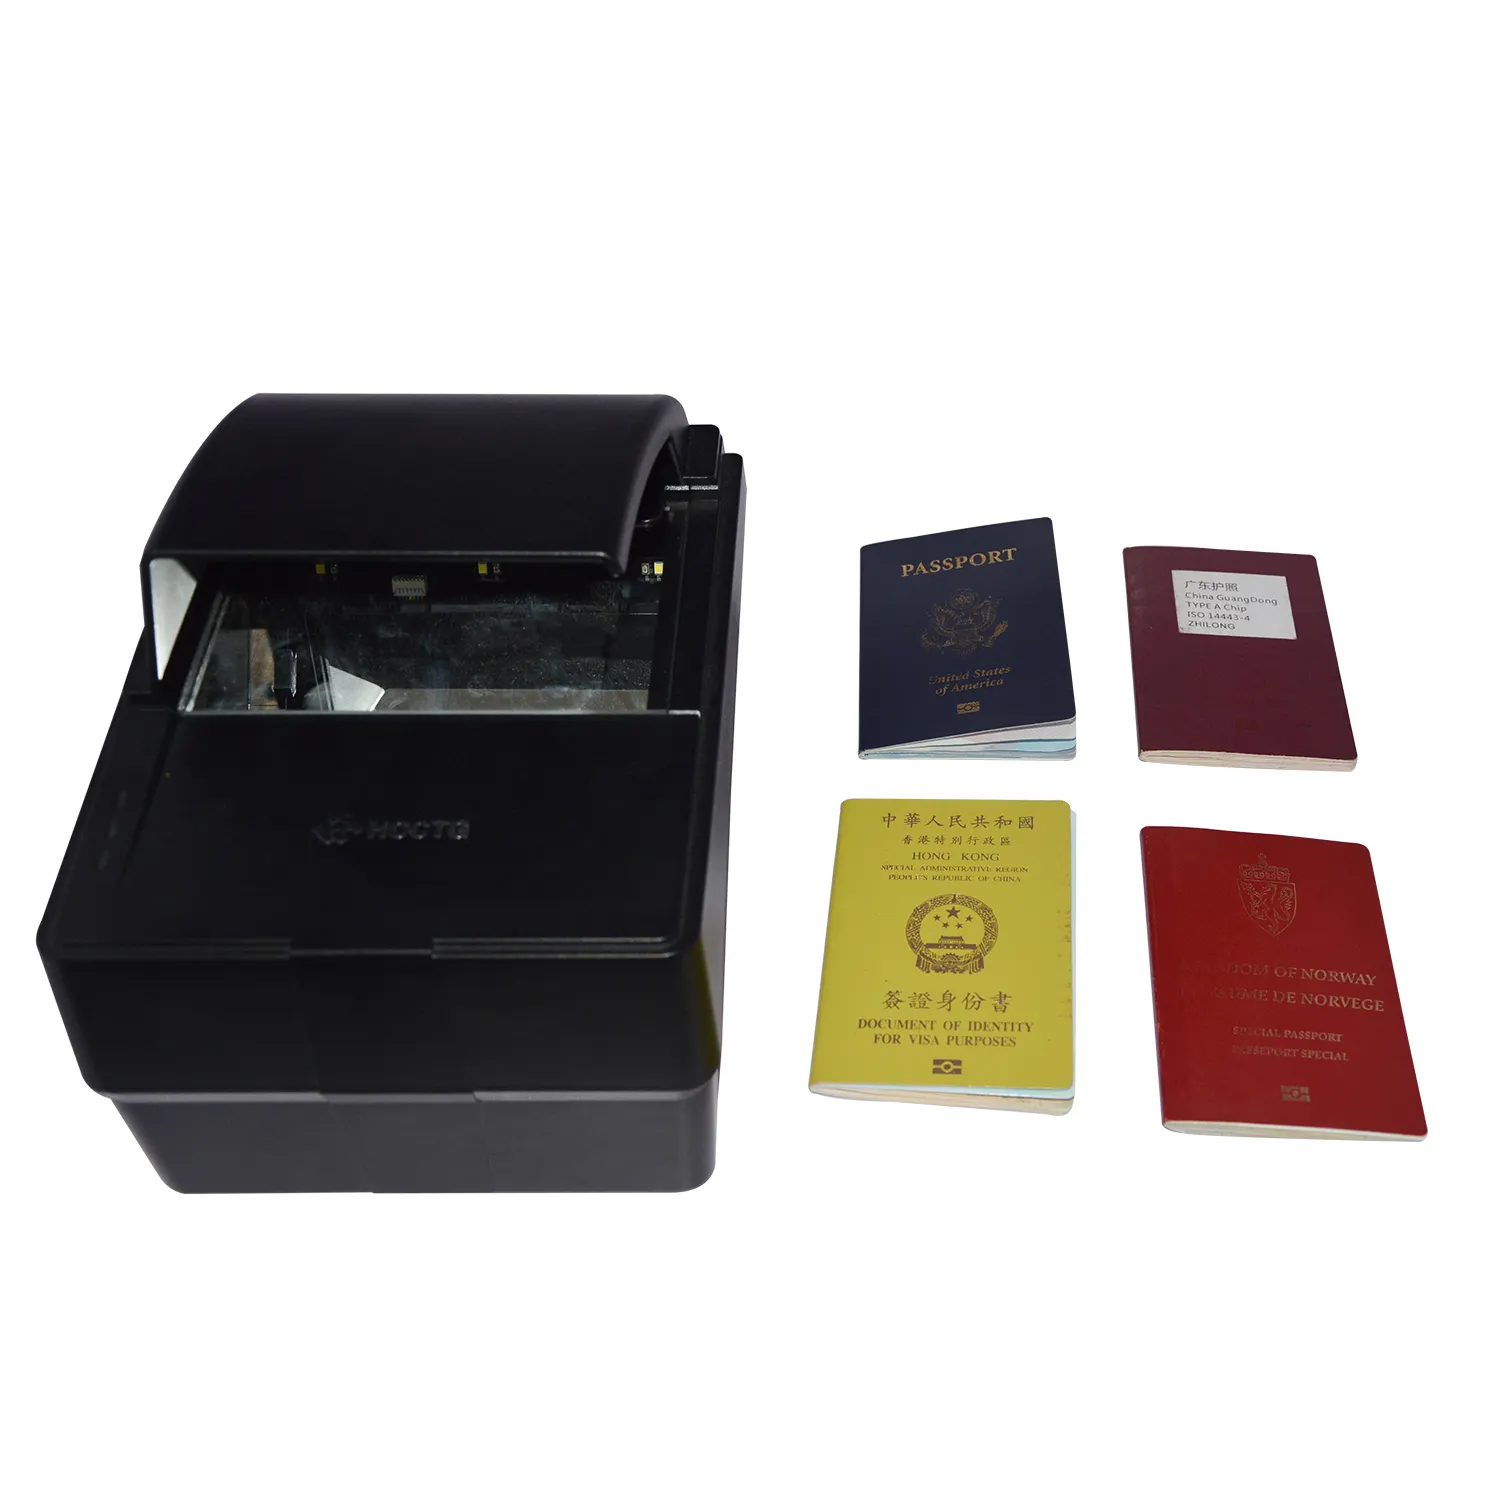 Passport reader check scanner for visitor management system PPR100B